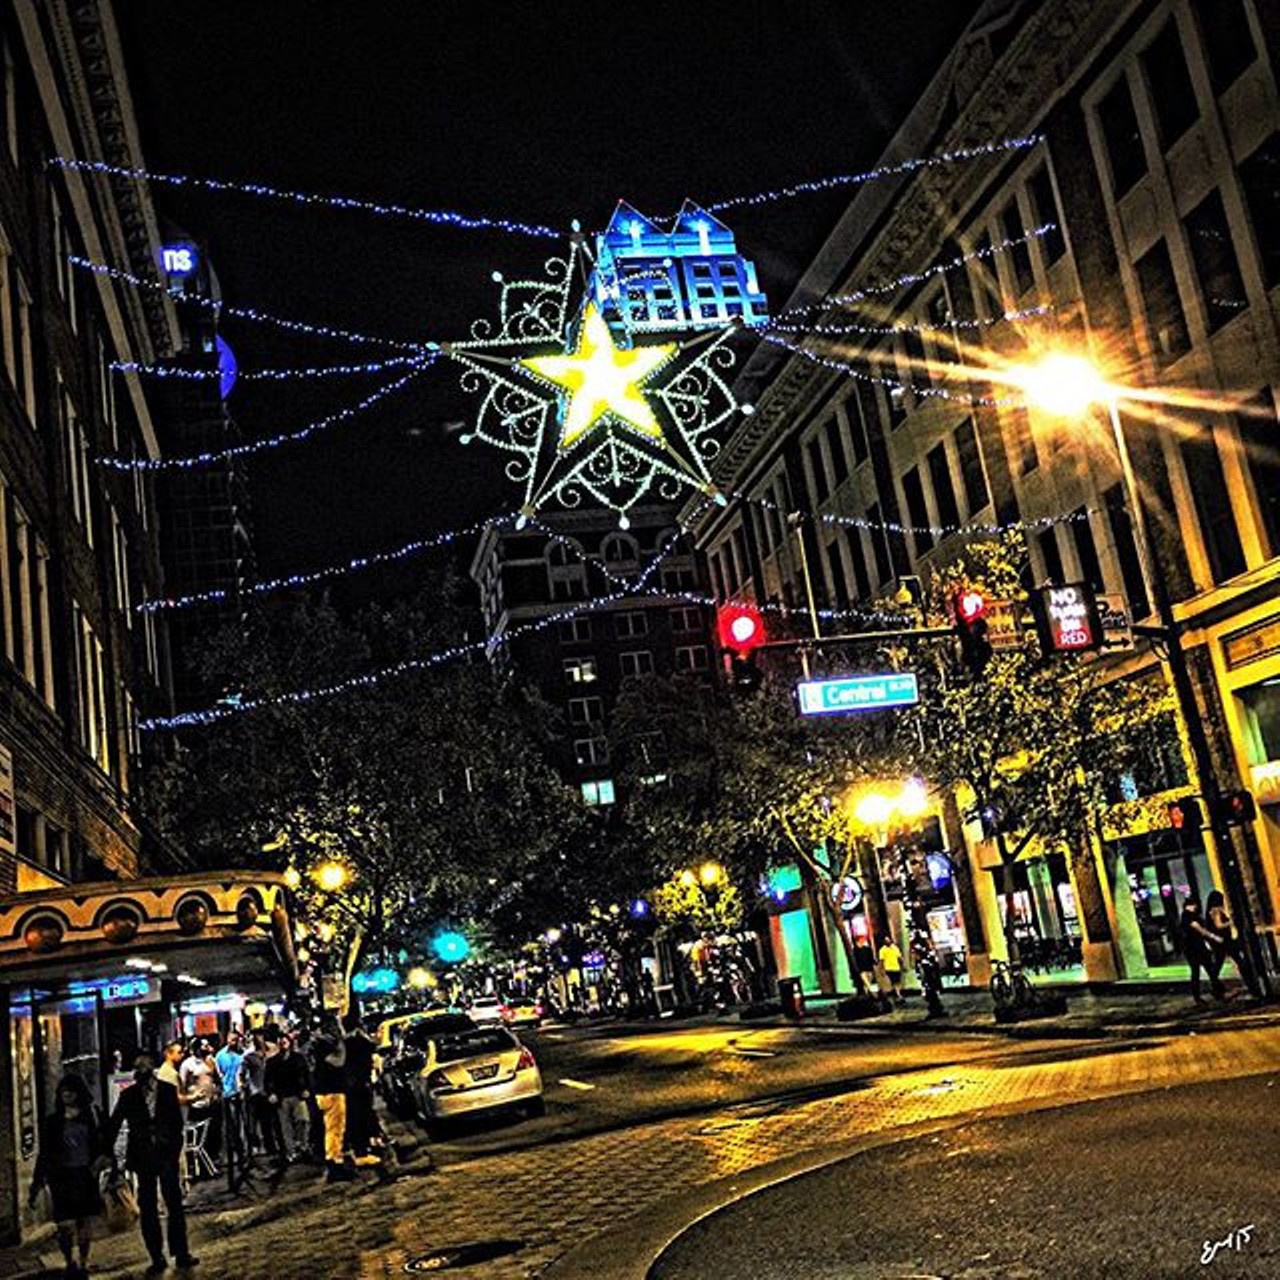 Downtown is looking pretty festive right abou tnow. Photo via idreamofemann on Instagram.